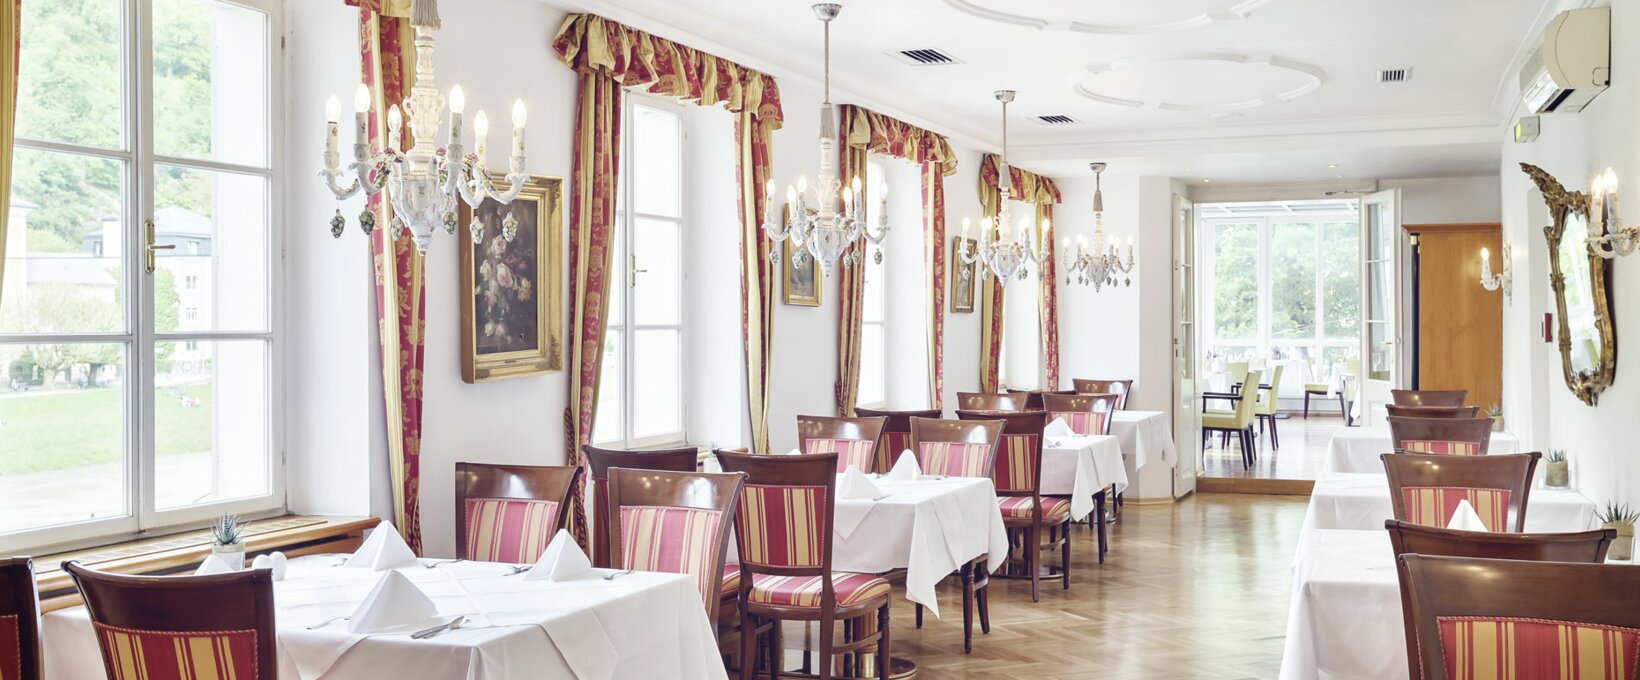 Restaurant "Symphonie" seating area | Hotel Altstadt Salzburg